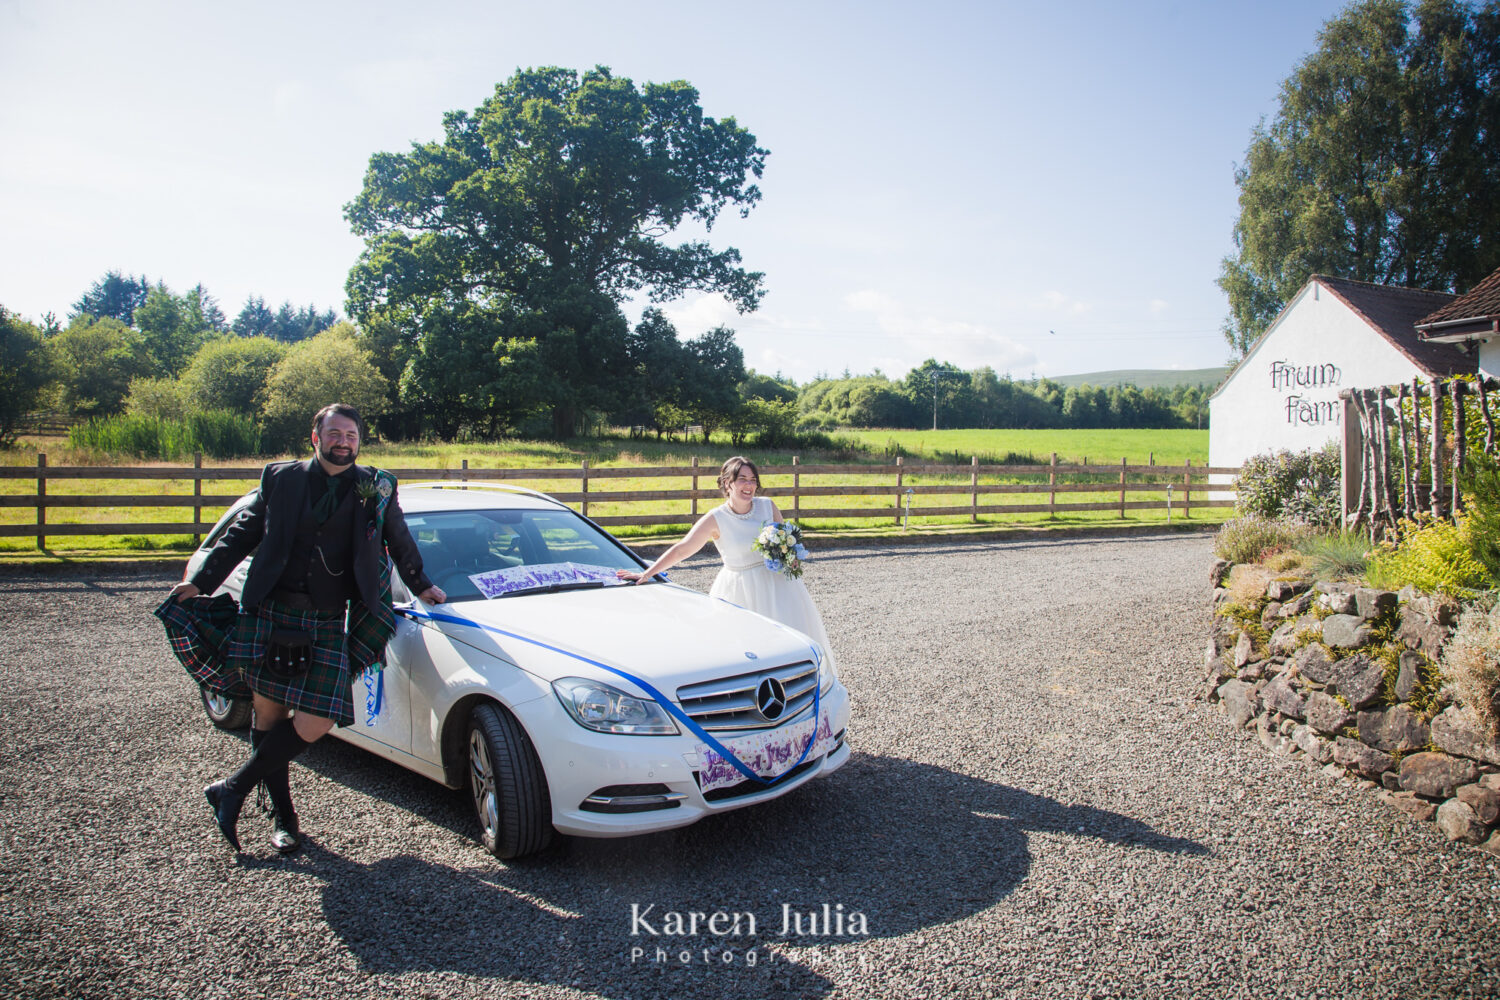 fun wedding car photo with bride and groom